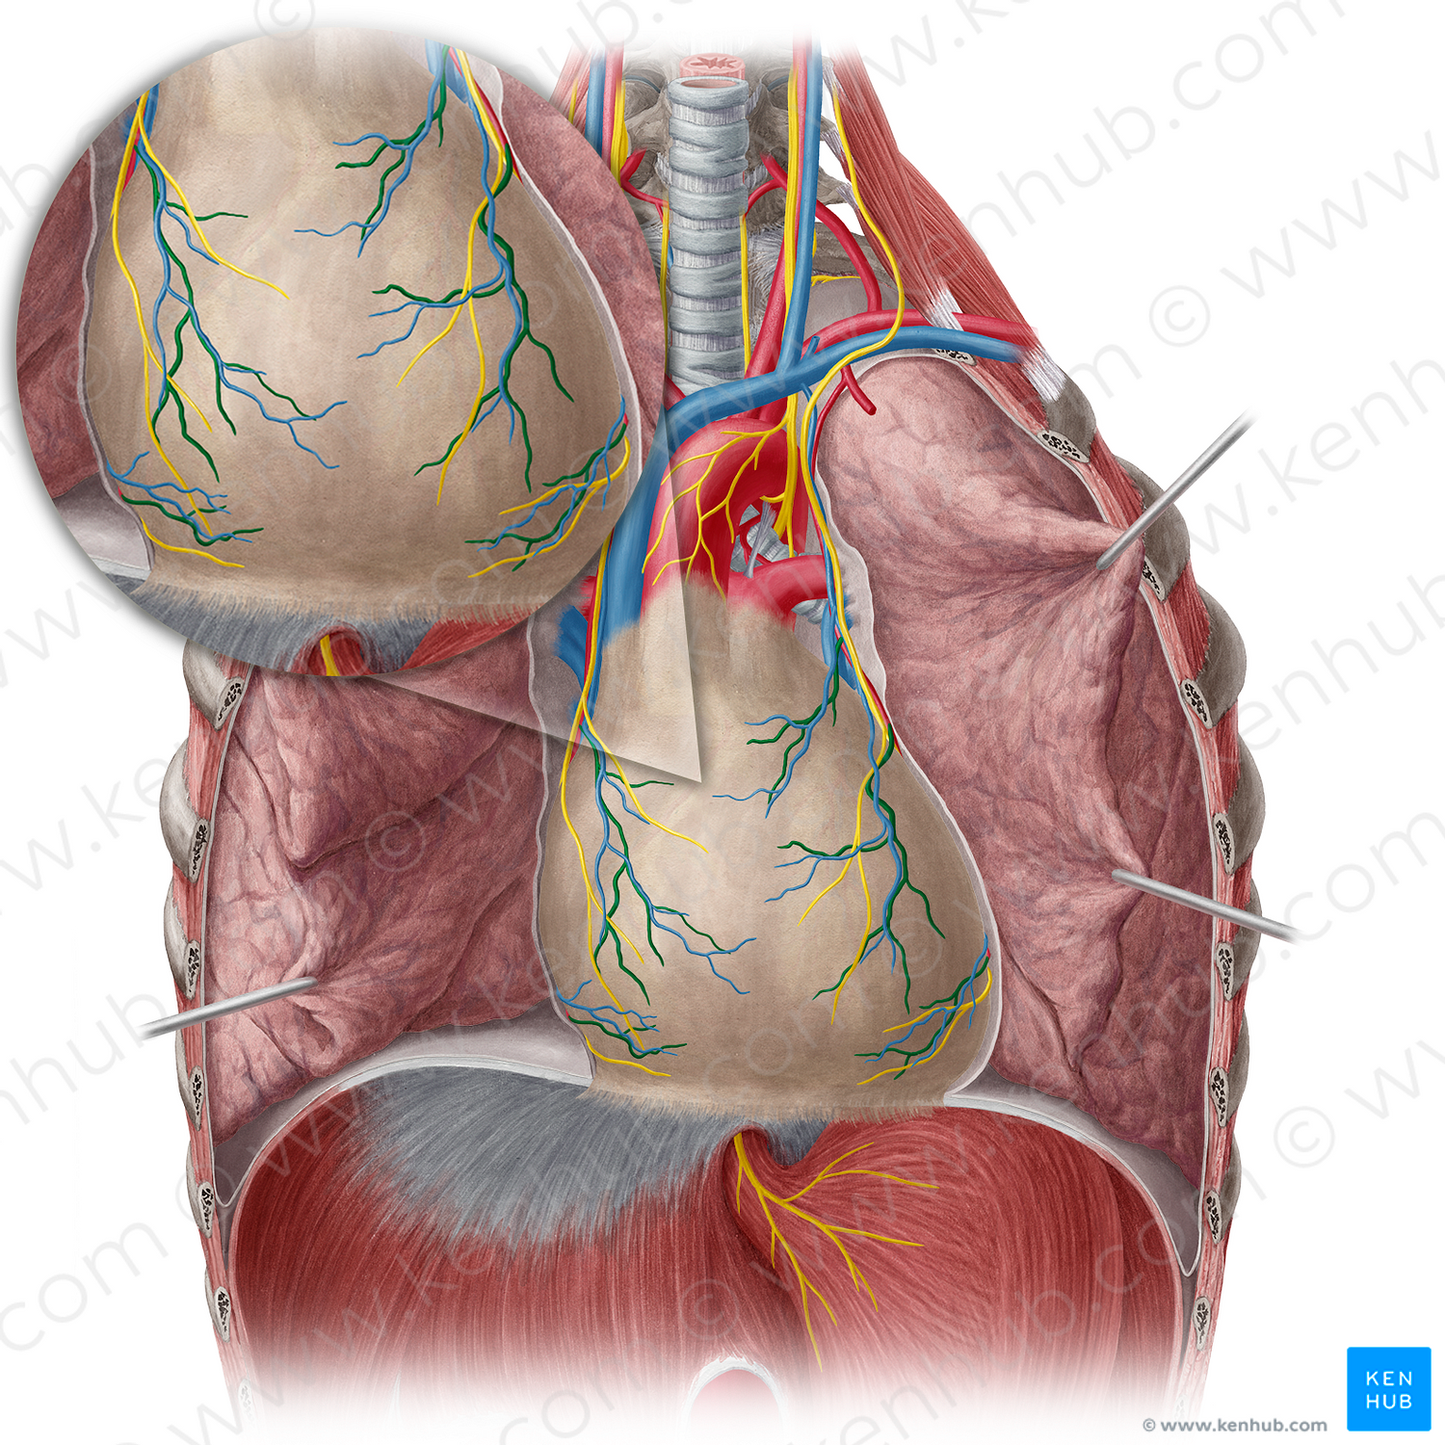 Pericardiacophrenic artery (#1616)